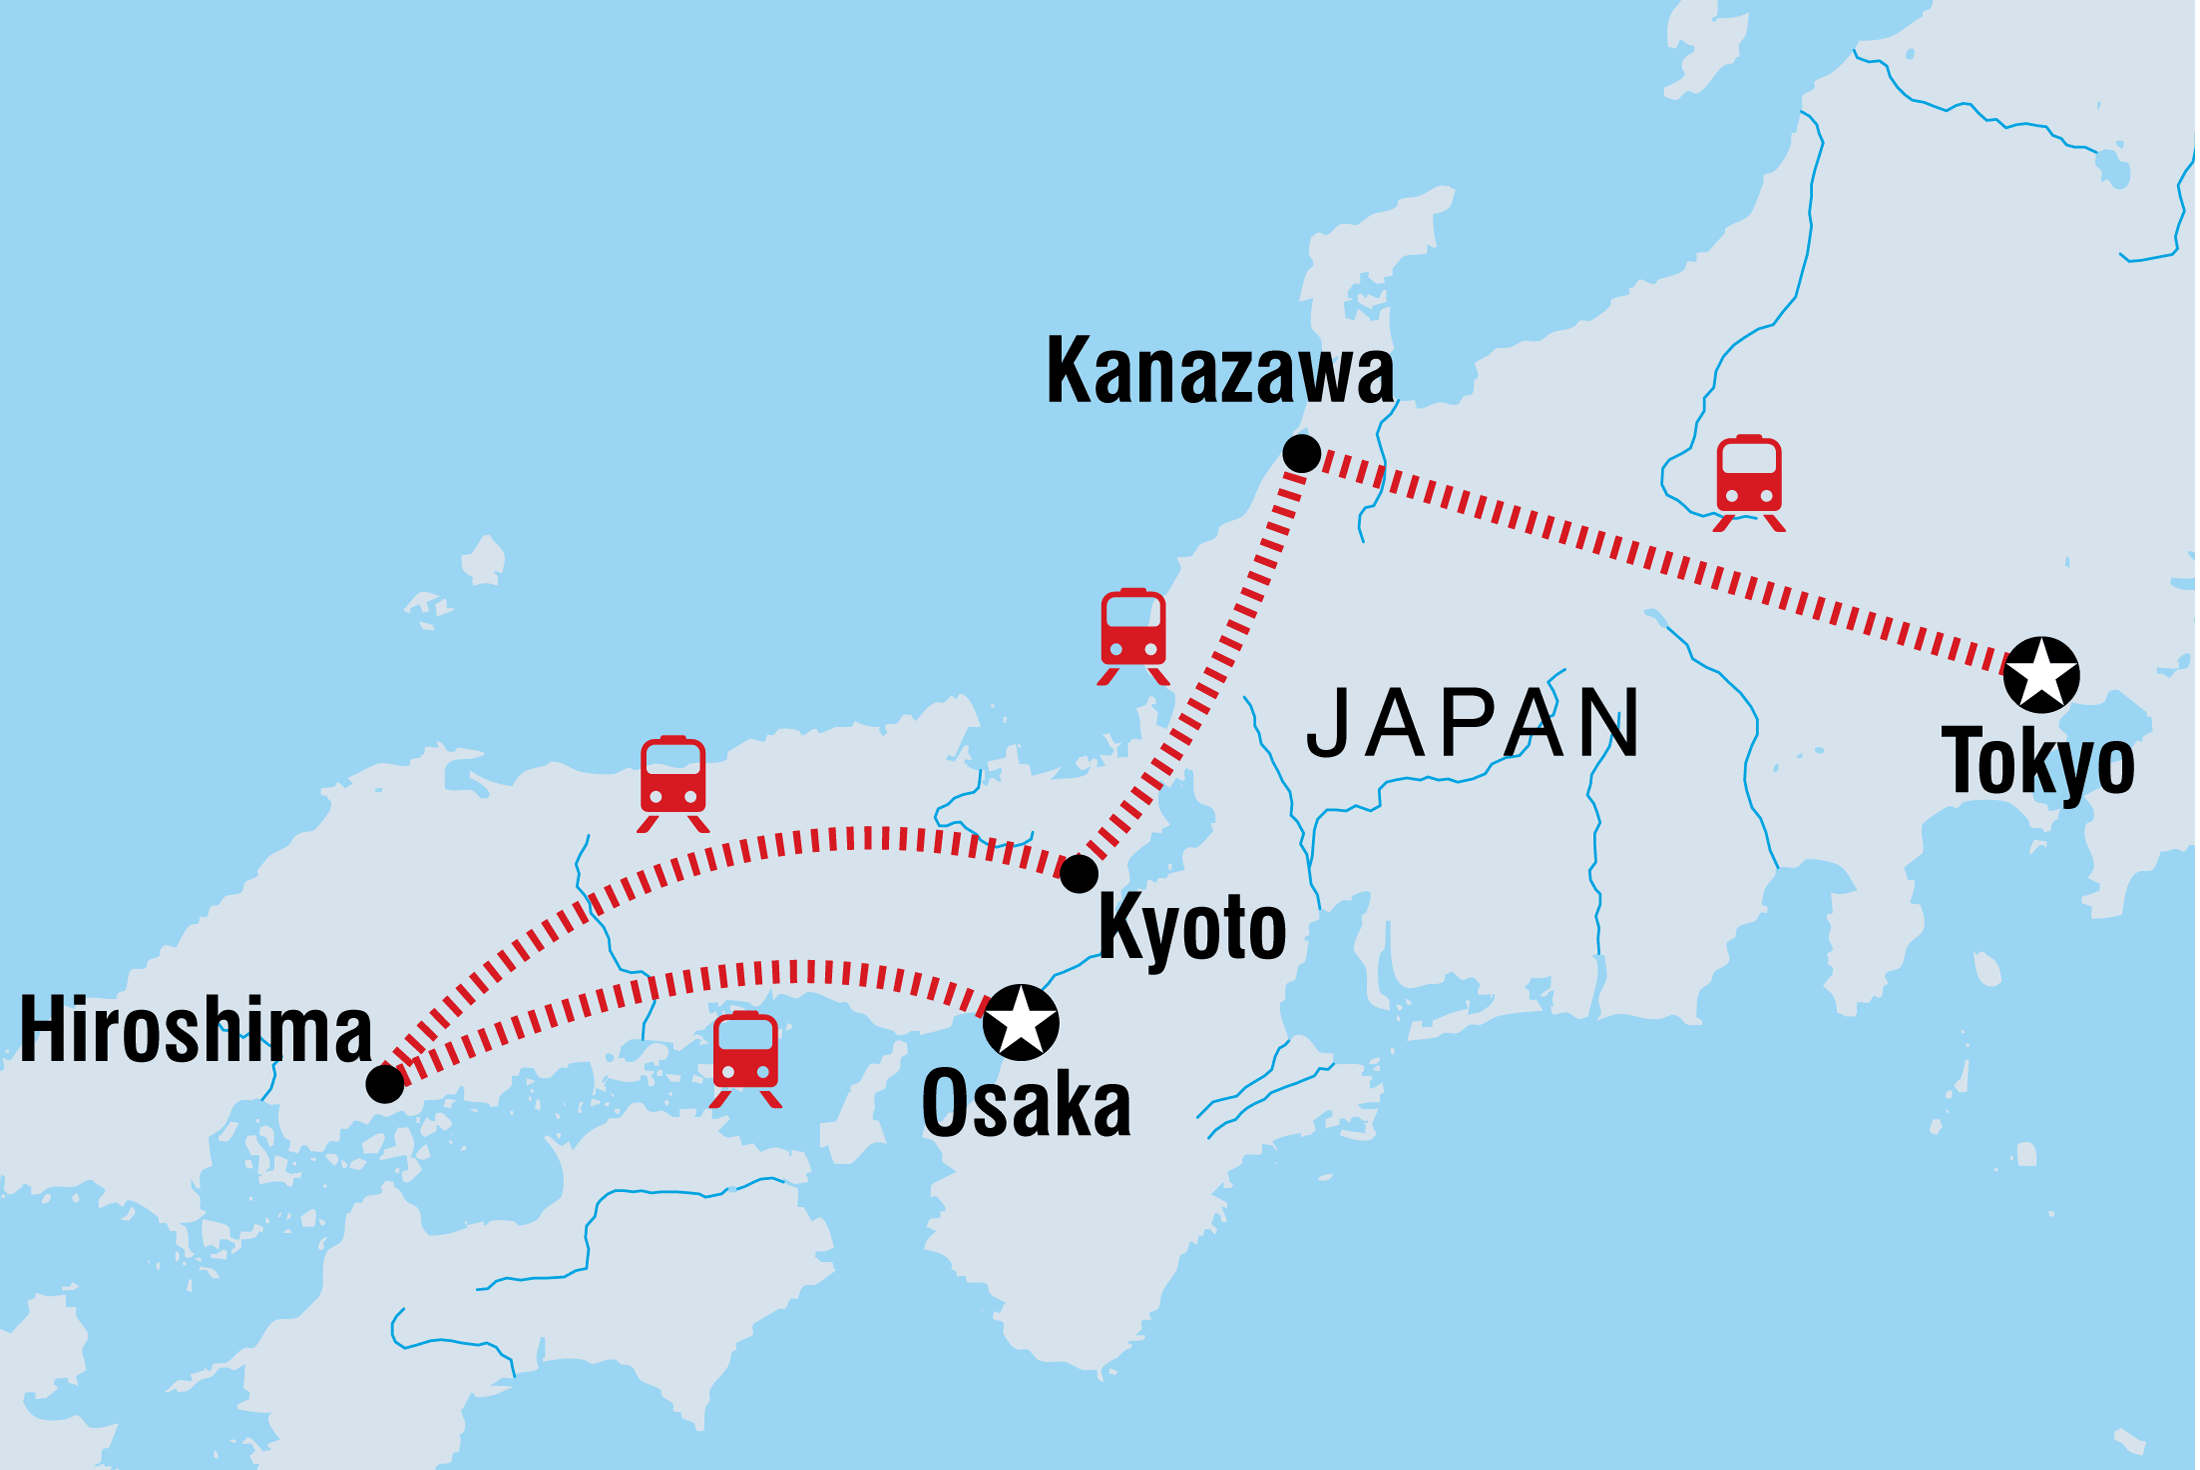 Map of Essential Japan including Japan